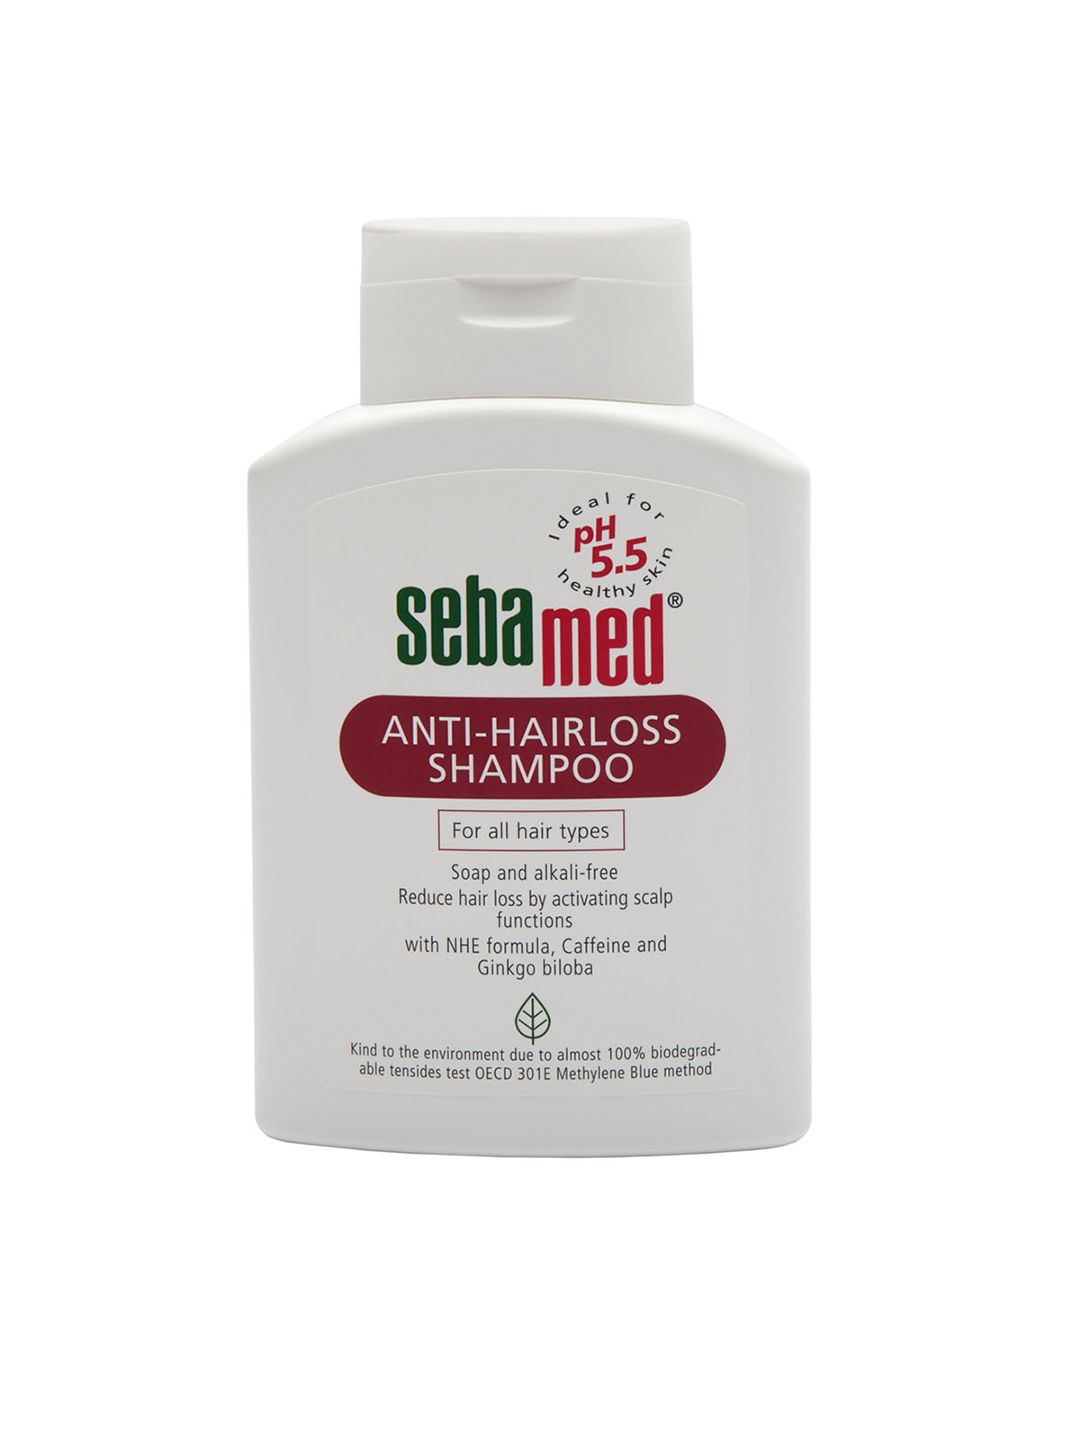 Sebamed Anti-Hairloss Shampoo 200ml Price in India